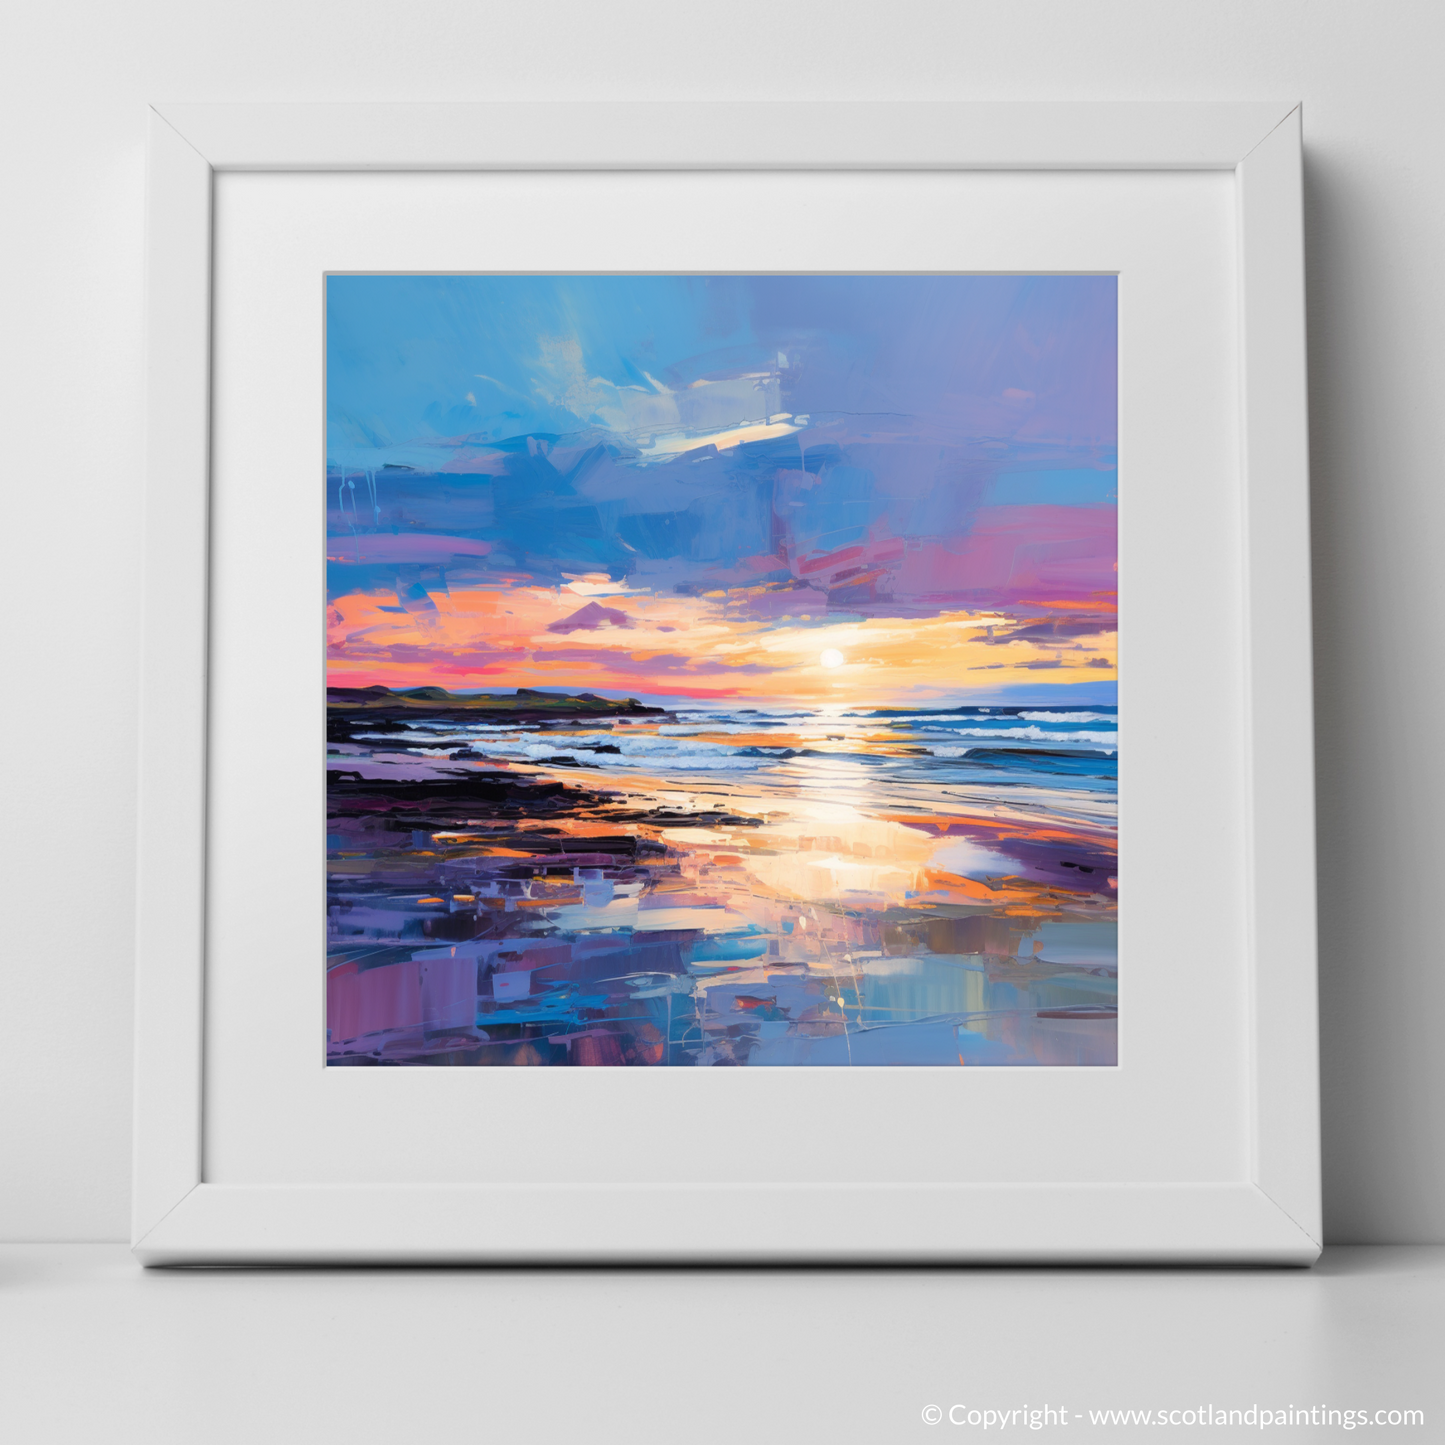 Art Print of Balmedie Beach at dusk with a white frame